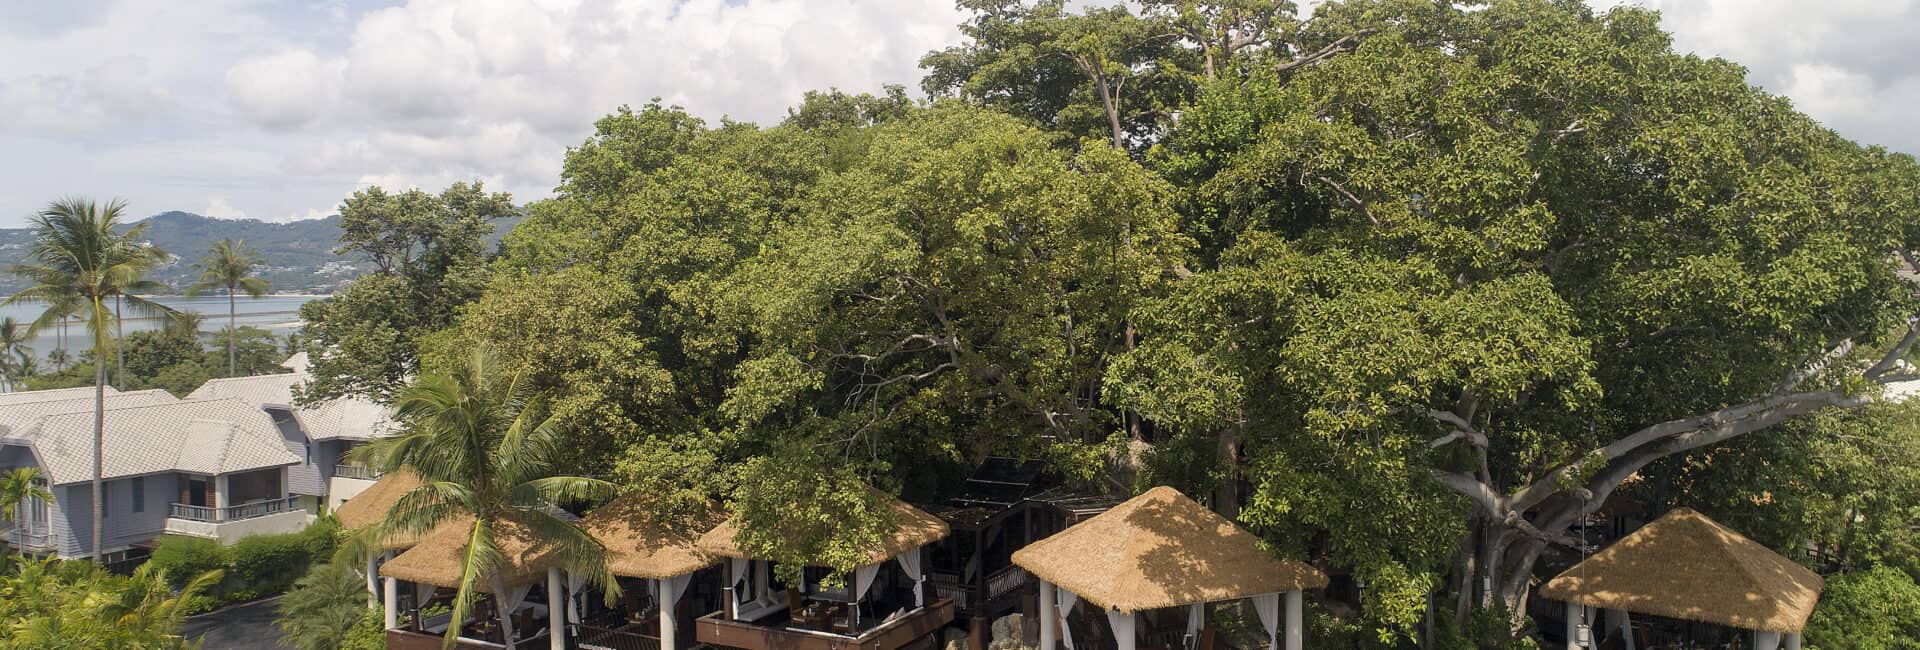 Anantara Lawana Koh Samui Resort - Tree Tops Dining